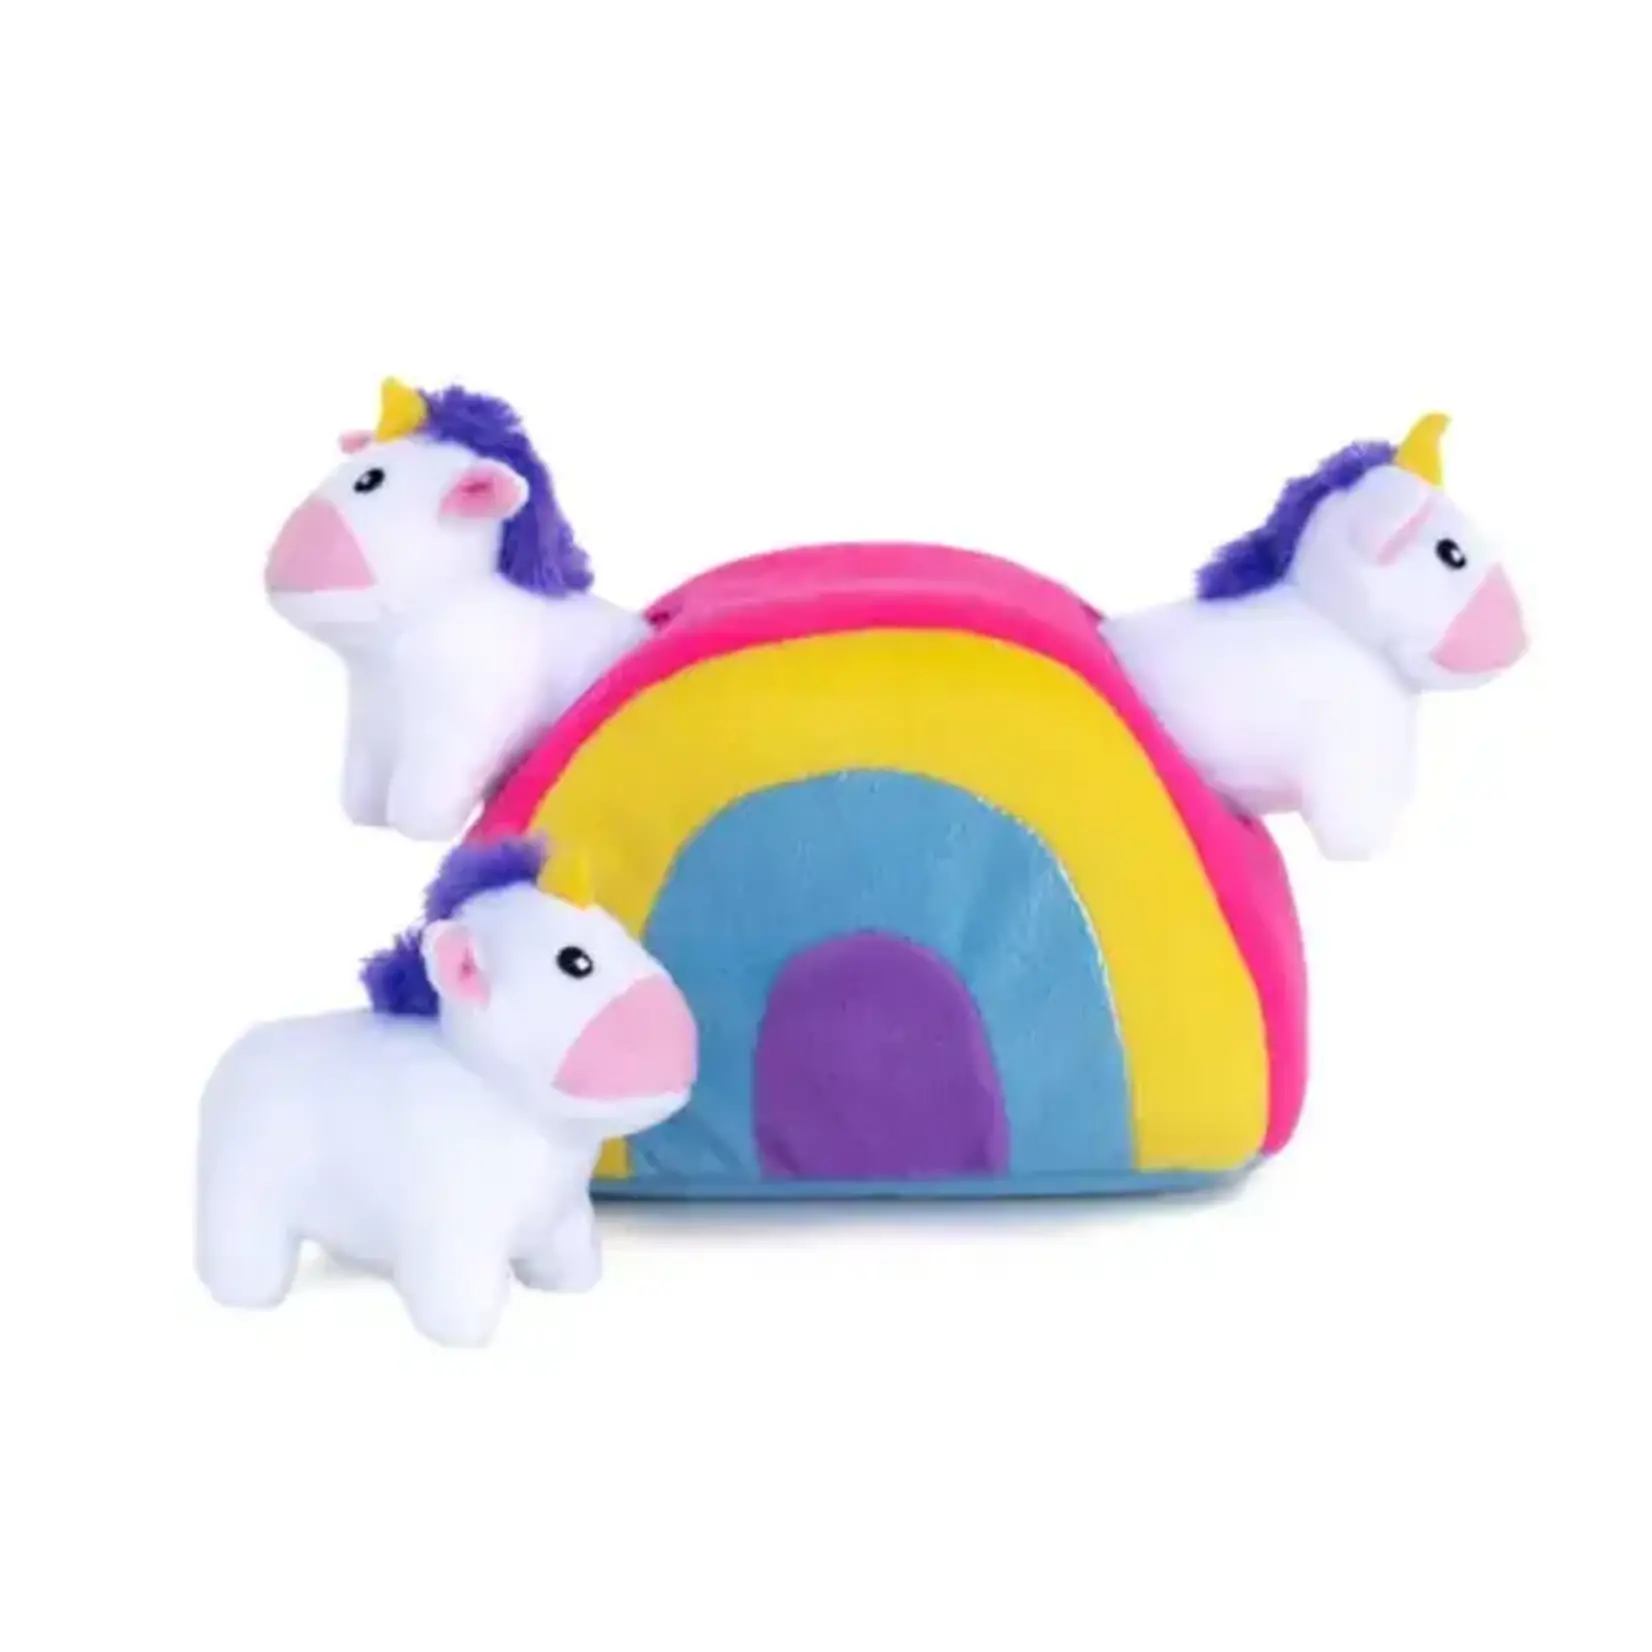 Zippy paws Zippy Paws Burrow Squeaker Toy Unicorns in Rainbow